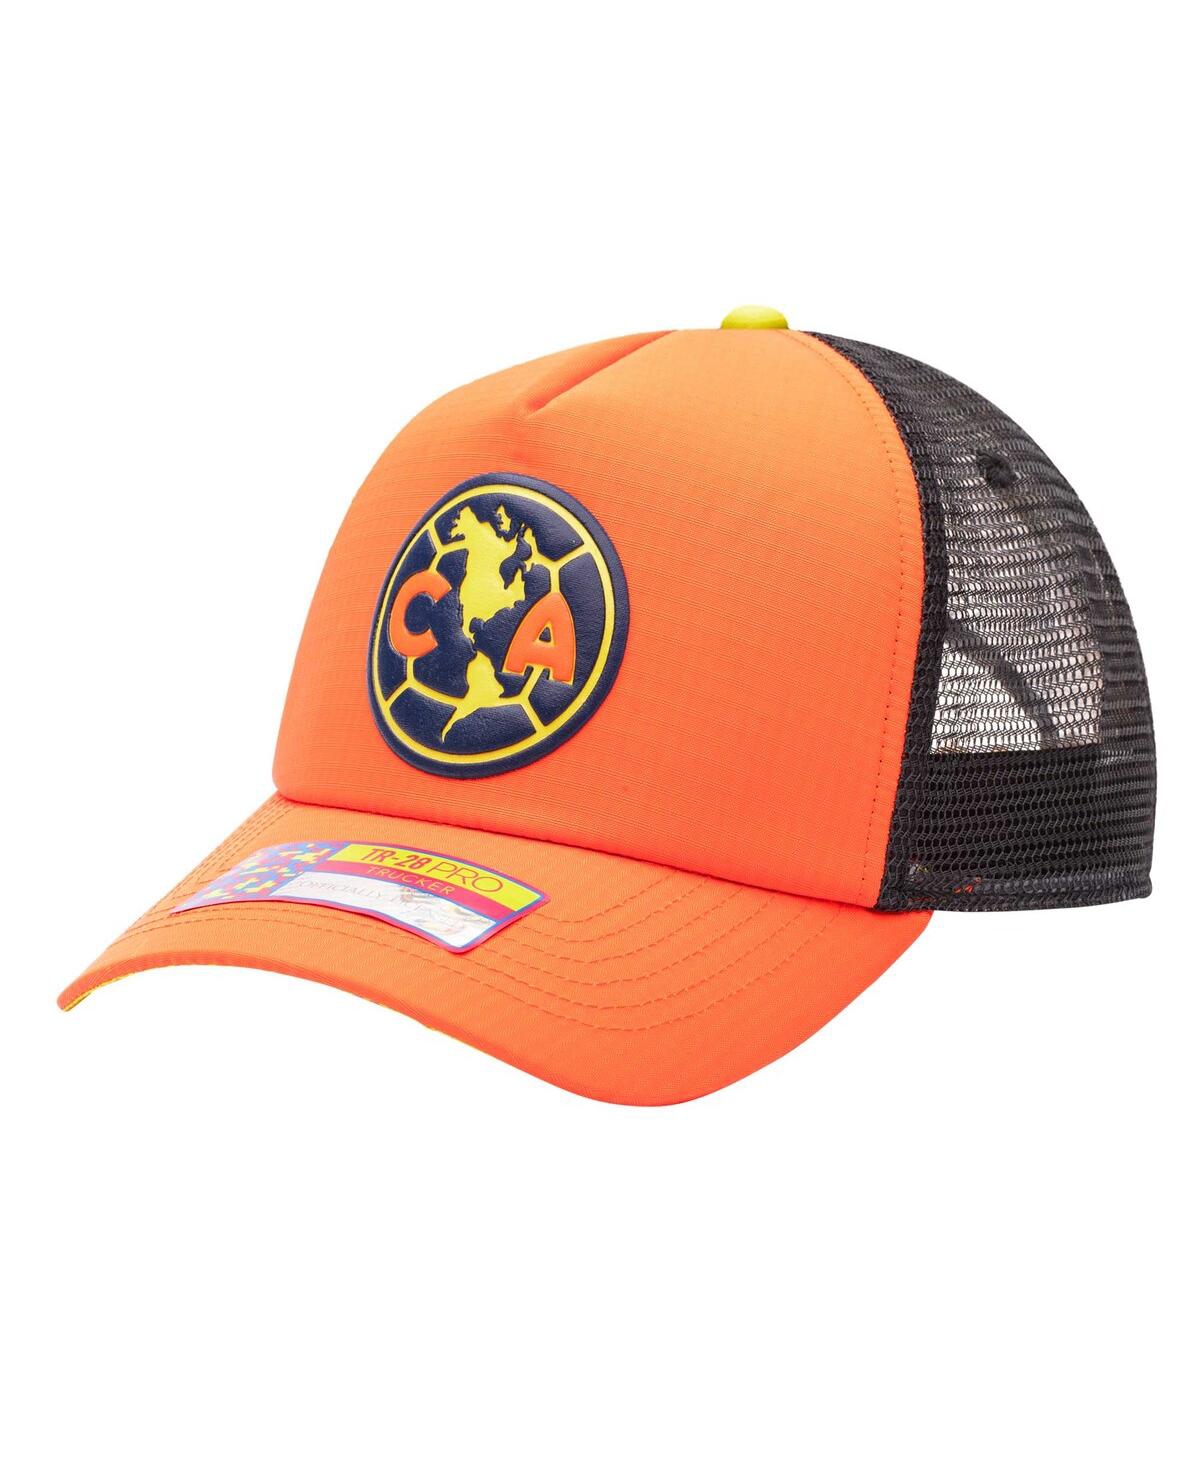 Men's Orange Club America Trucker Adjustable Hat - Orange